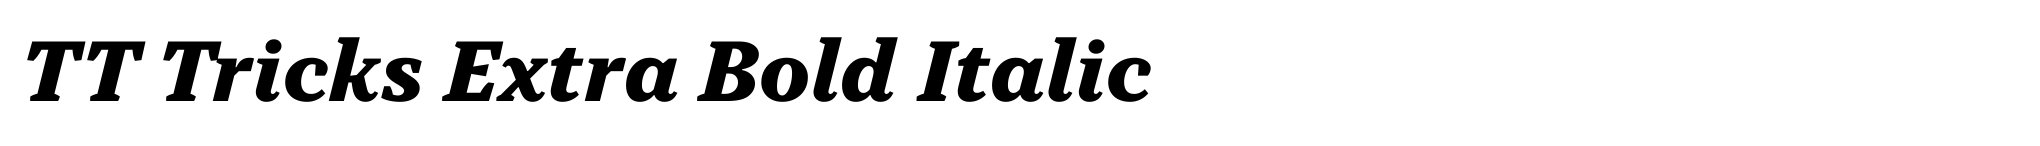 TT Tricks Extra Bold Italic image